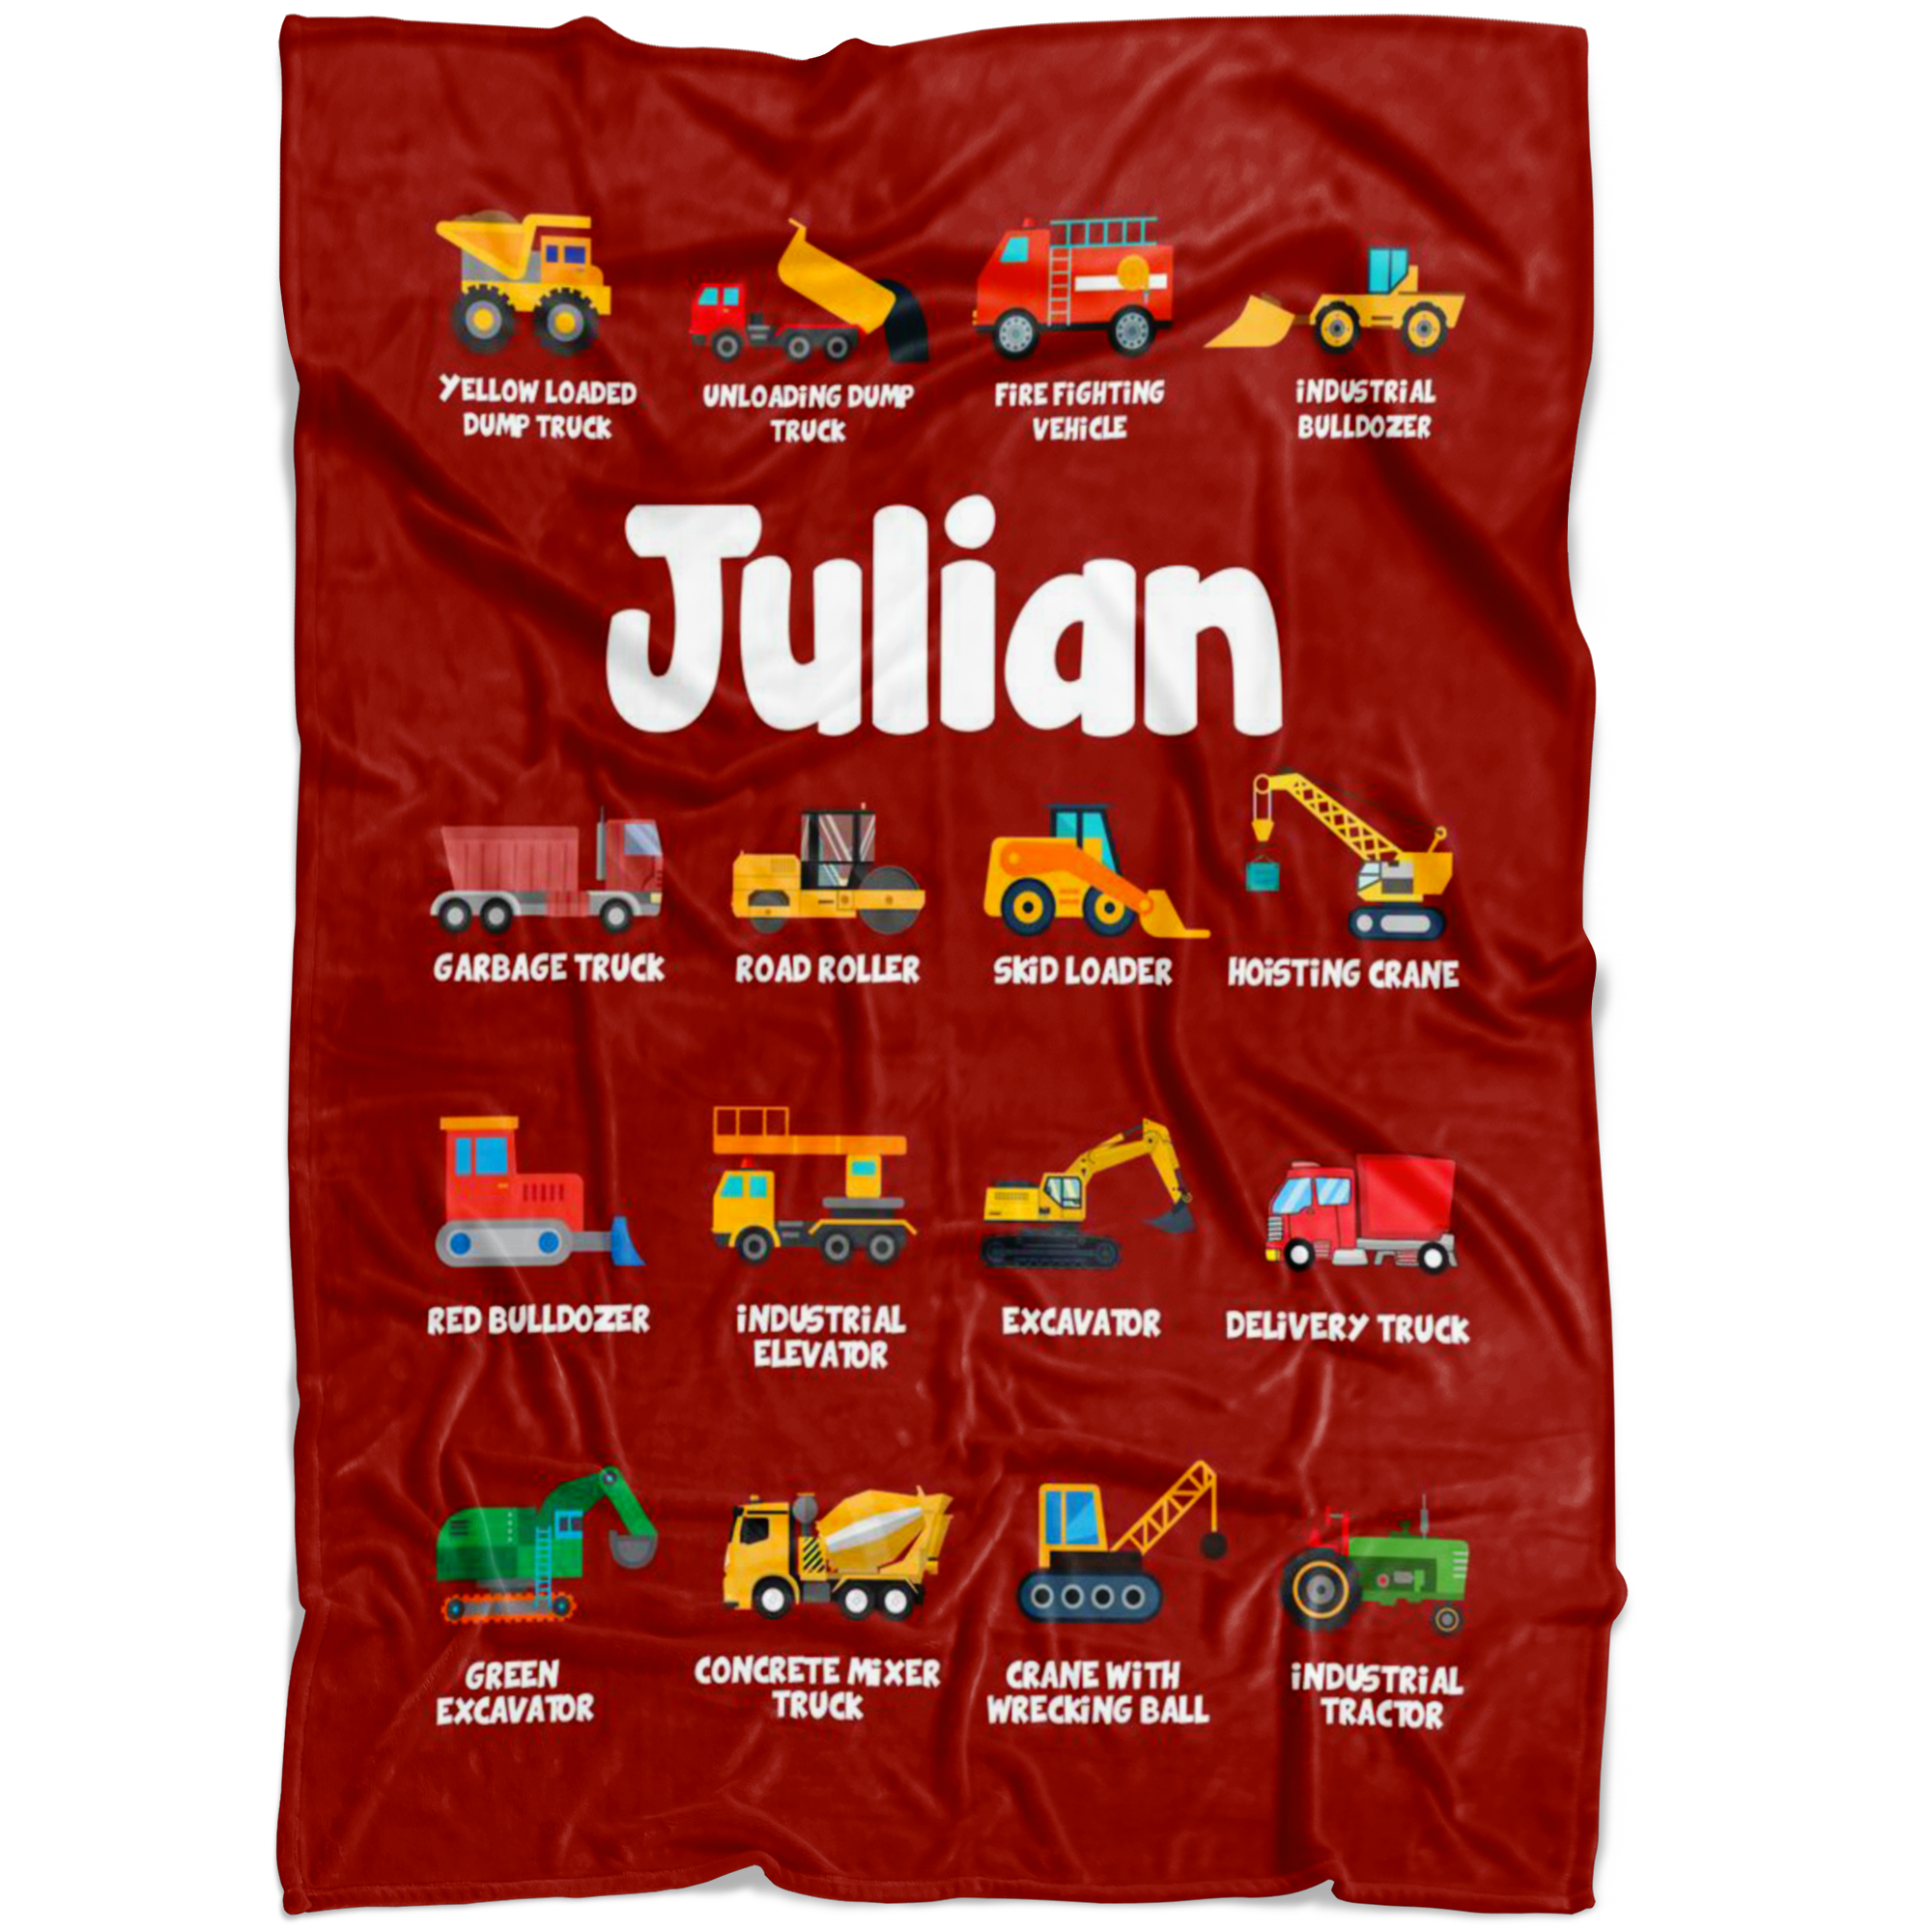 Julian Construction Blanket Red